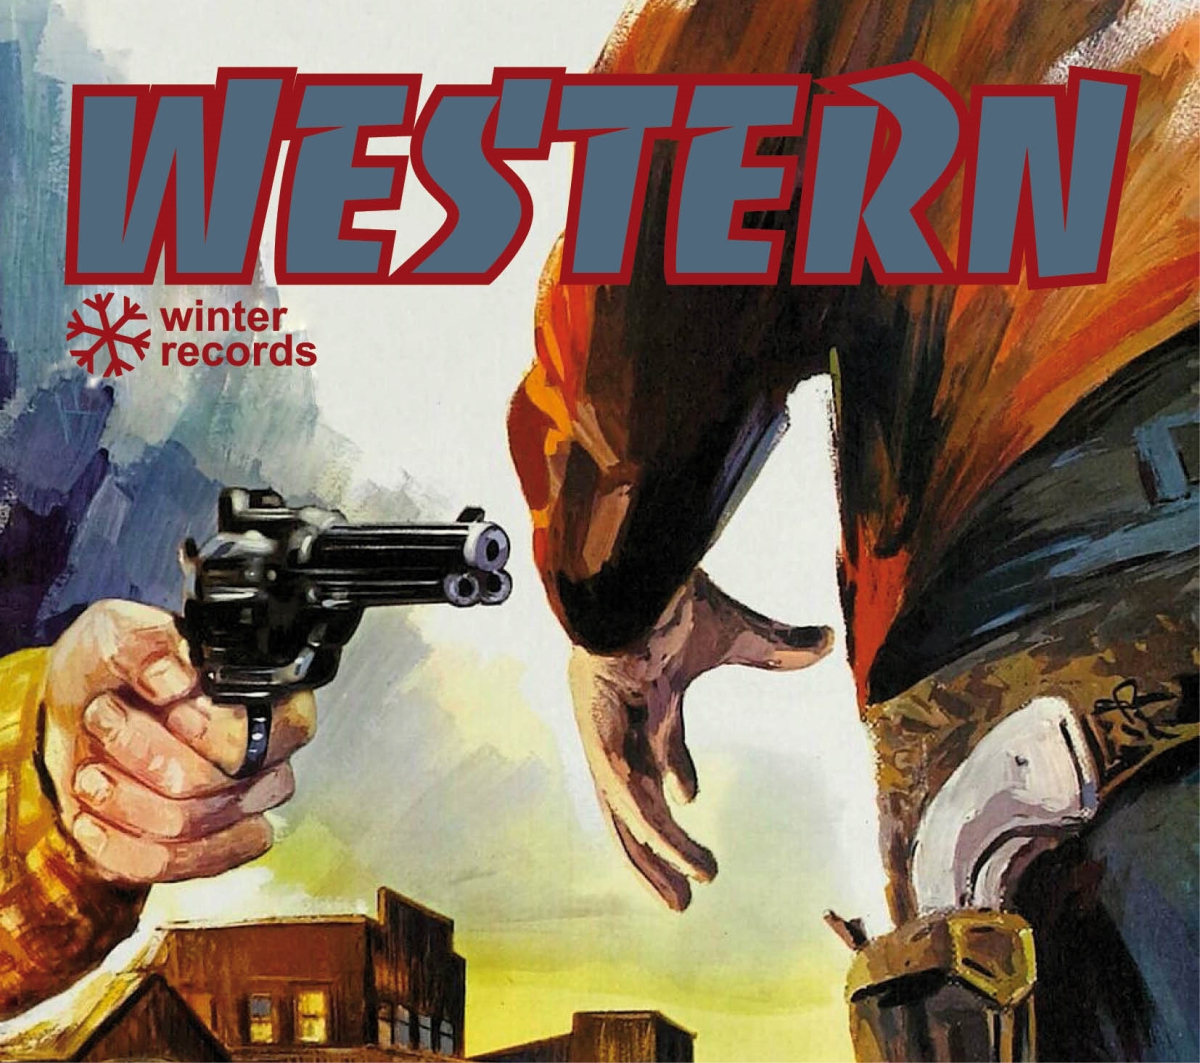 LP/CD Western  (vol.6)